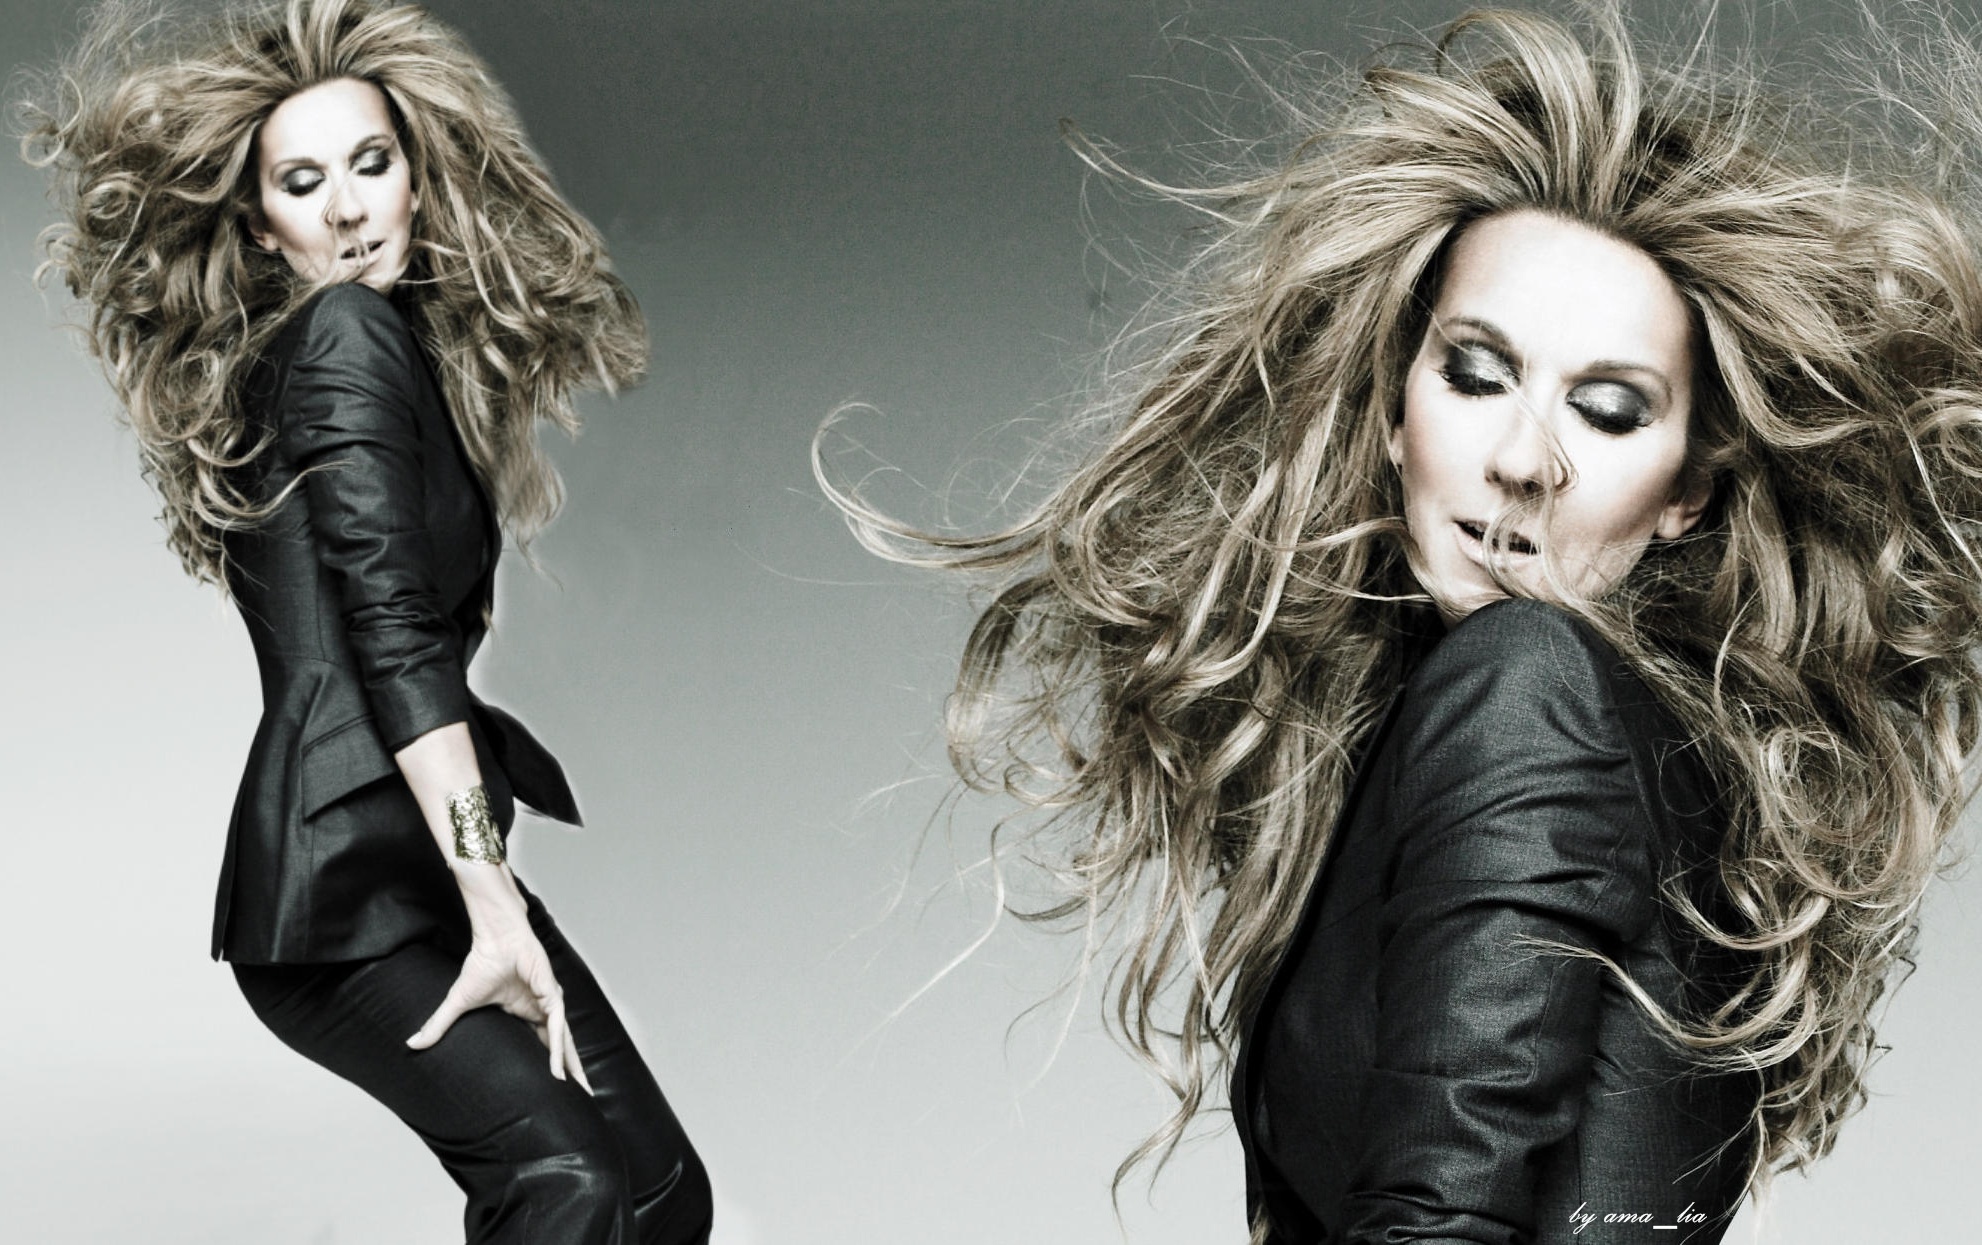 Music Celine Dion HD Wallpaper | Background Image